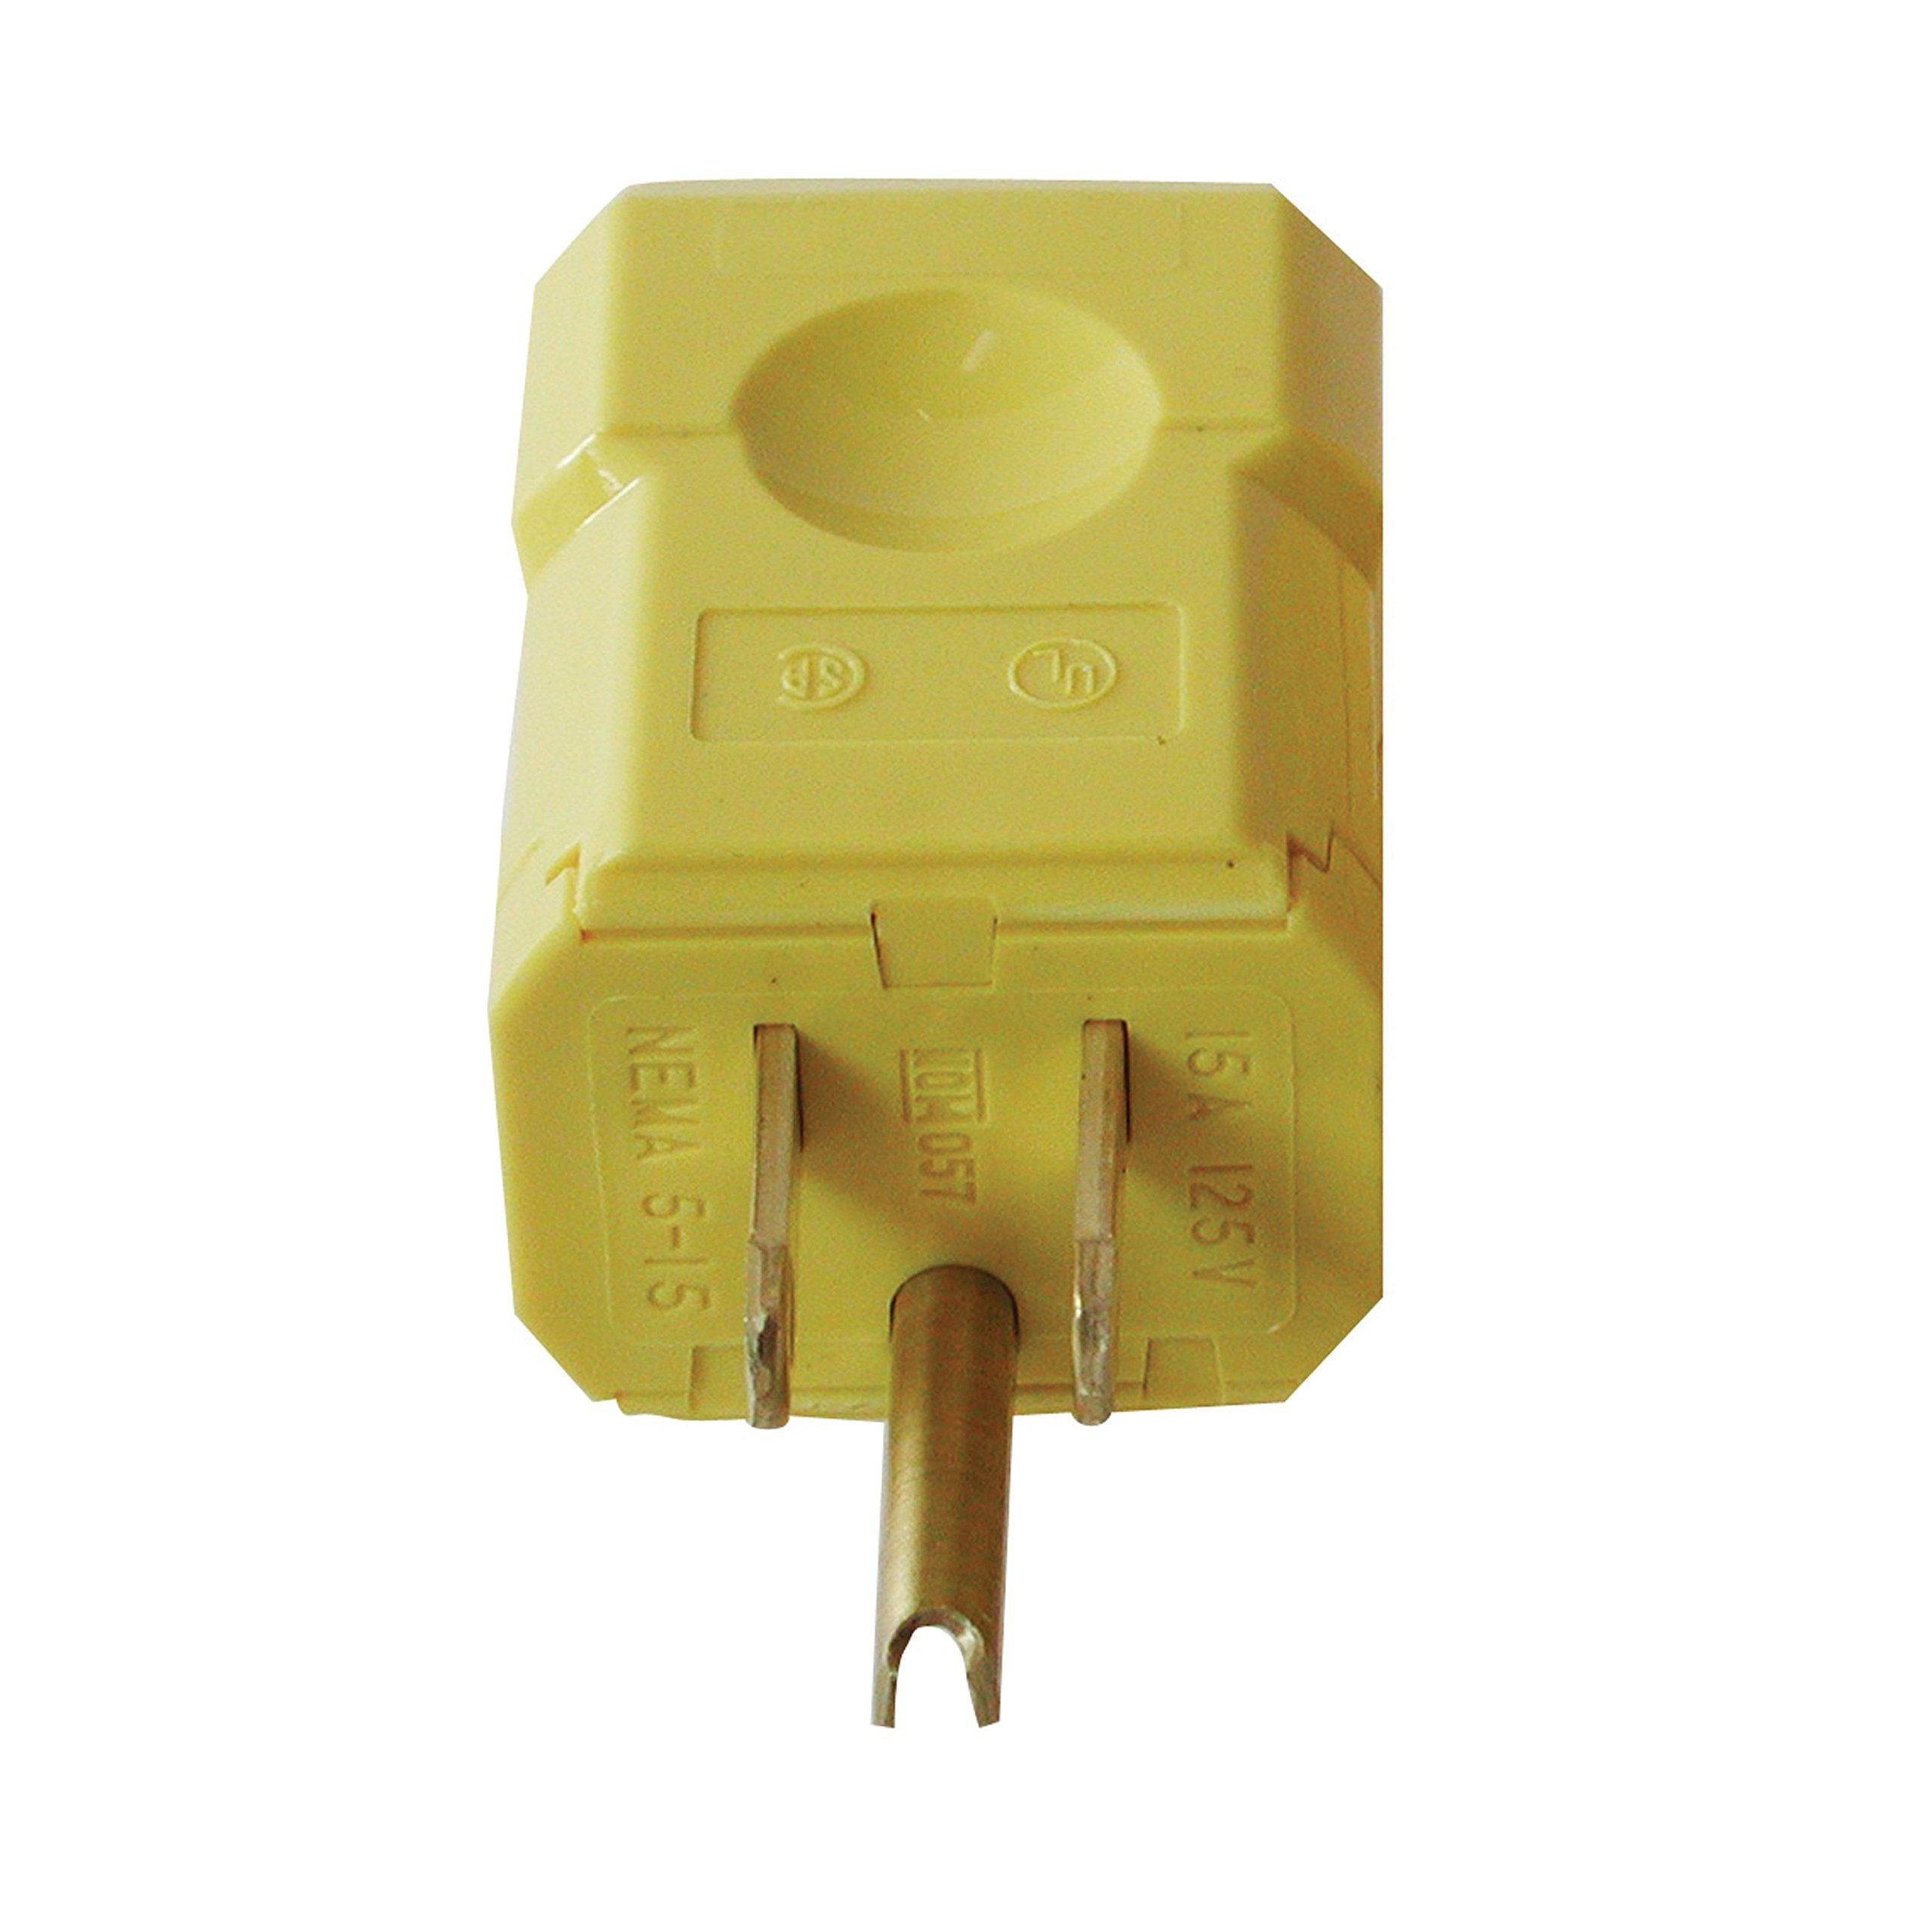 Diamond Group Valterra DG532496VP Quick Plug Connector-3-Wire, Male, Yellow